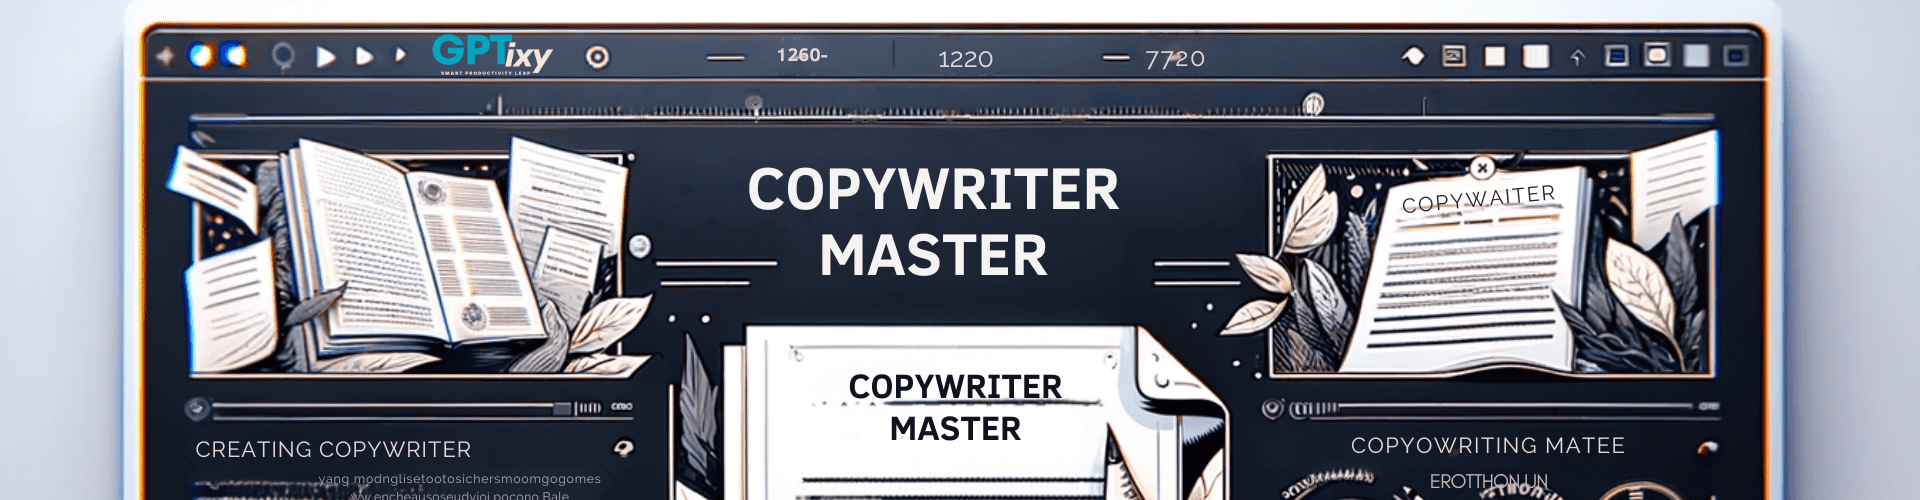 Copywriter Master by GPTixy.com